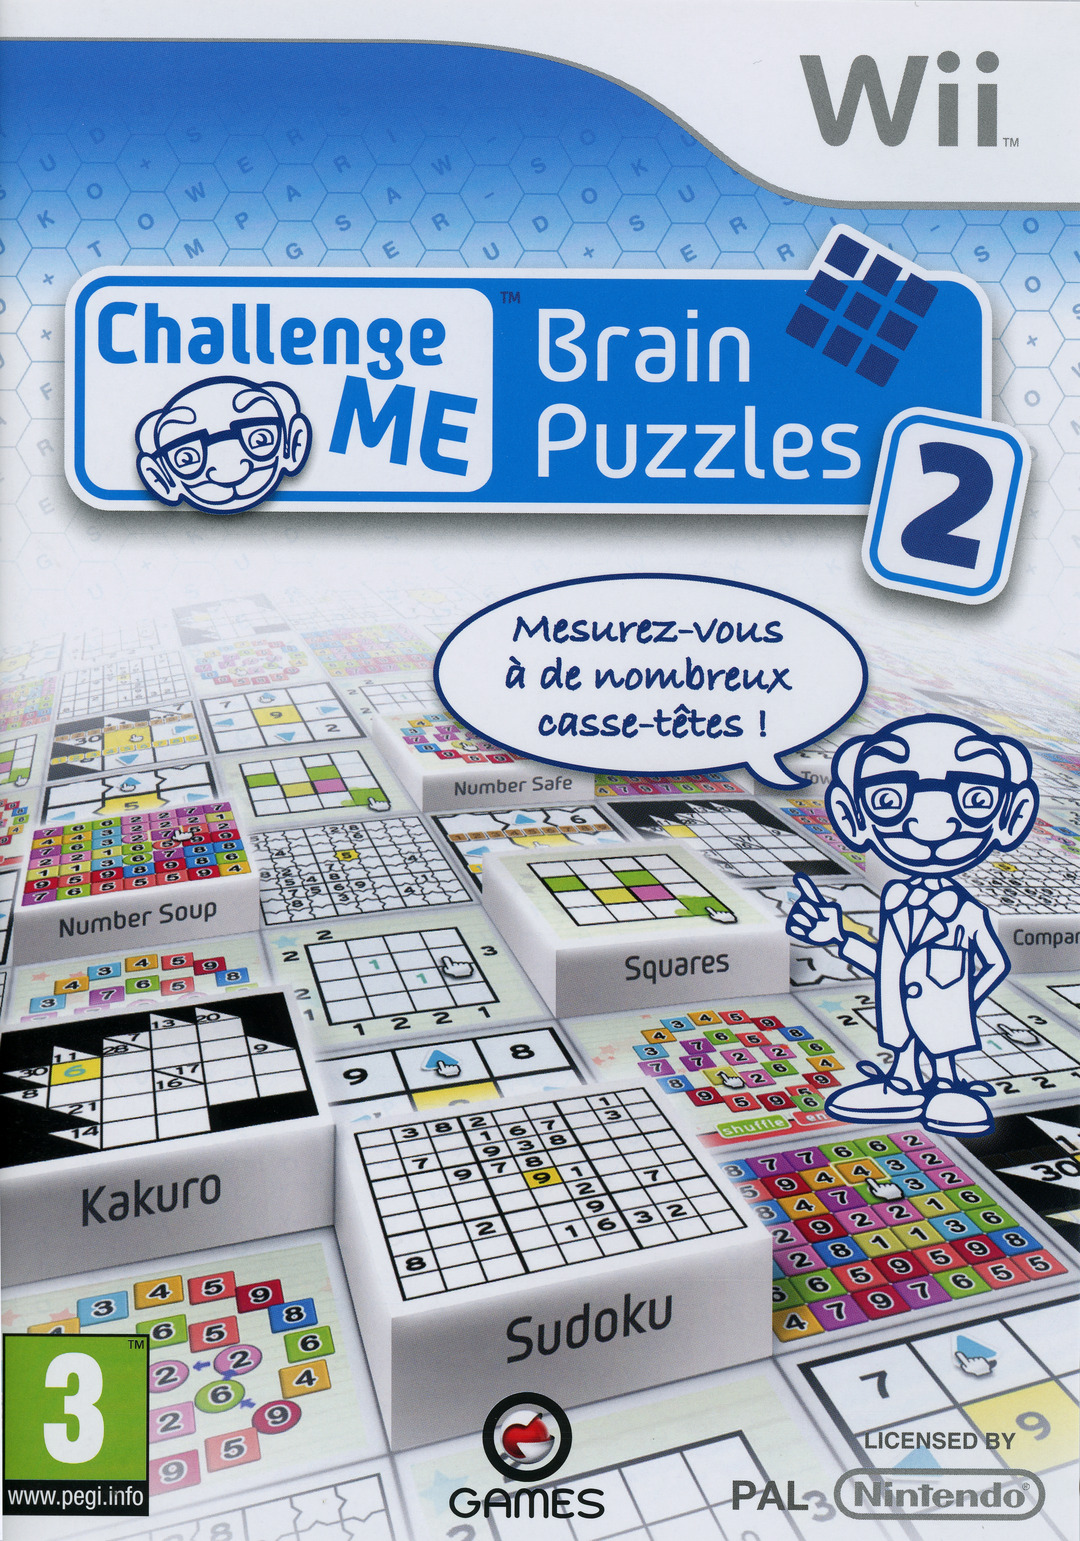 Enigma brain. Brain Puzzle игра. Головоломка NDS. Nintendo DS головоломка. Brain Puzzles логические игры.